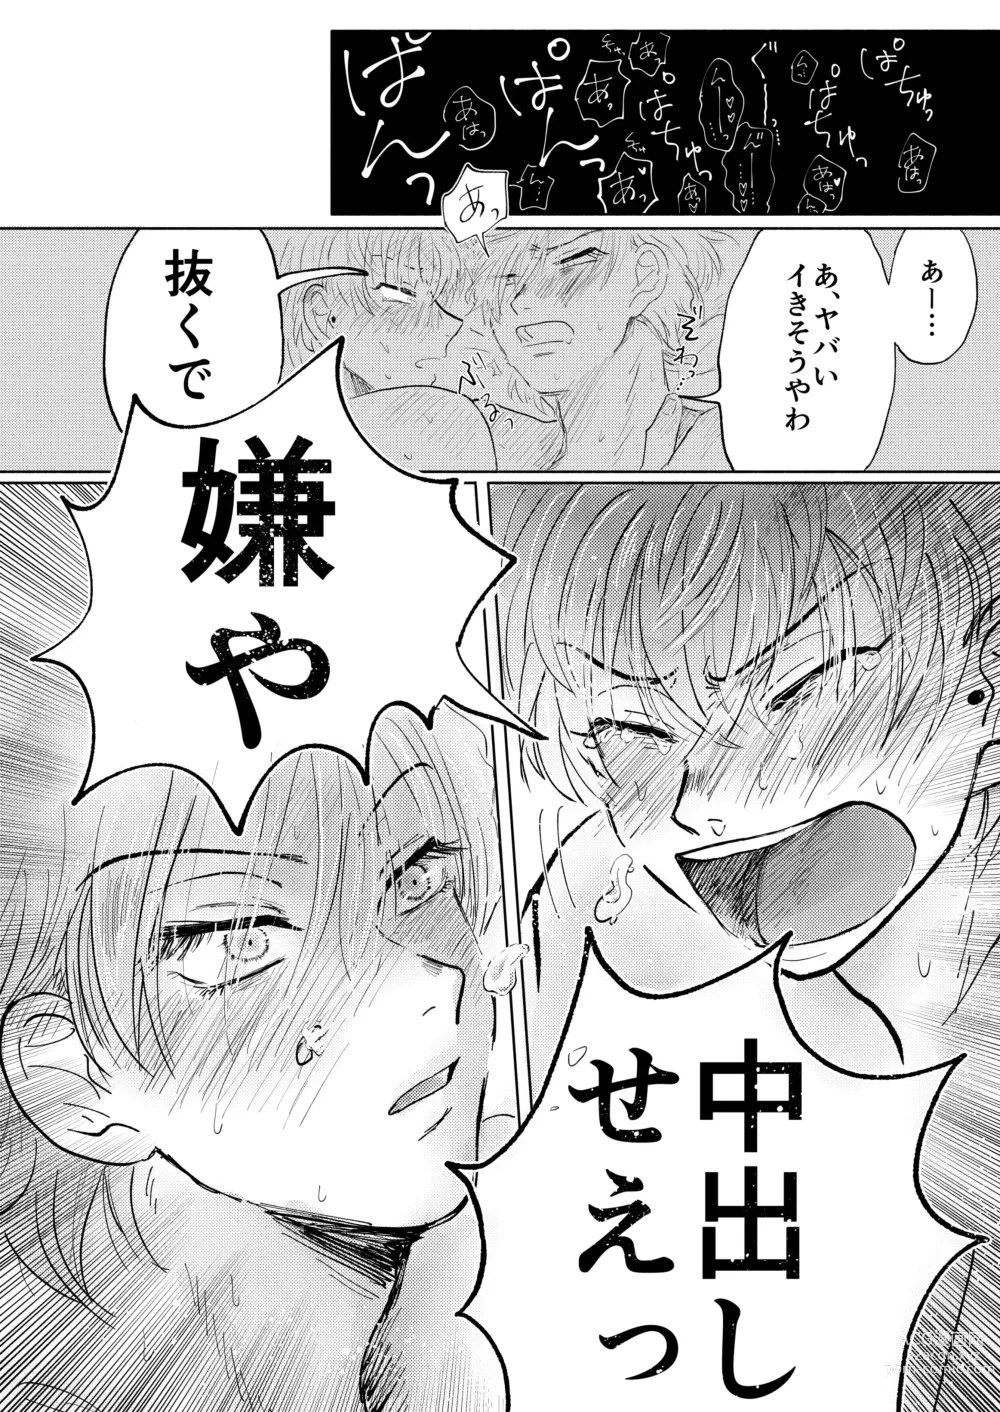 Page 37 of doujinshi Momokan